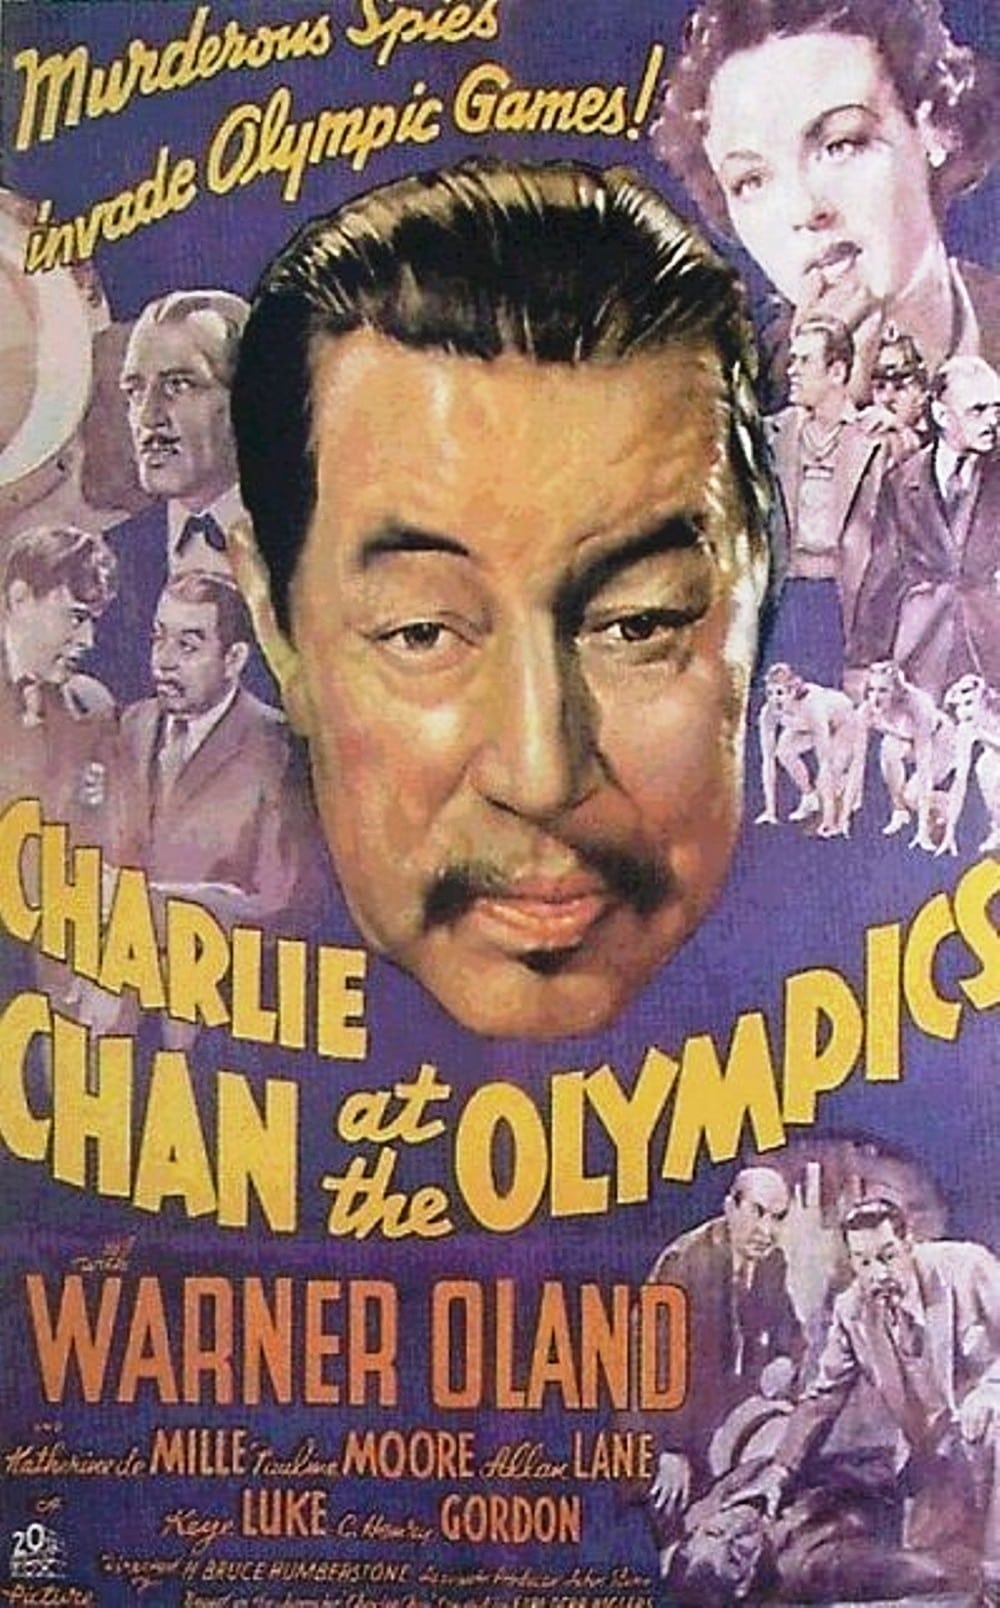 Charlie Chan Alle Olimpiadi [1937]